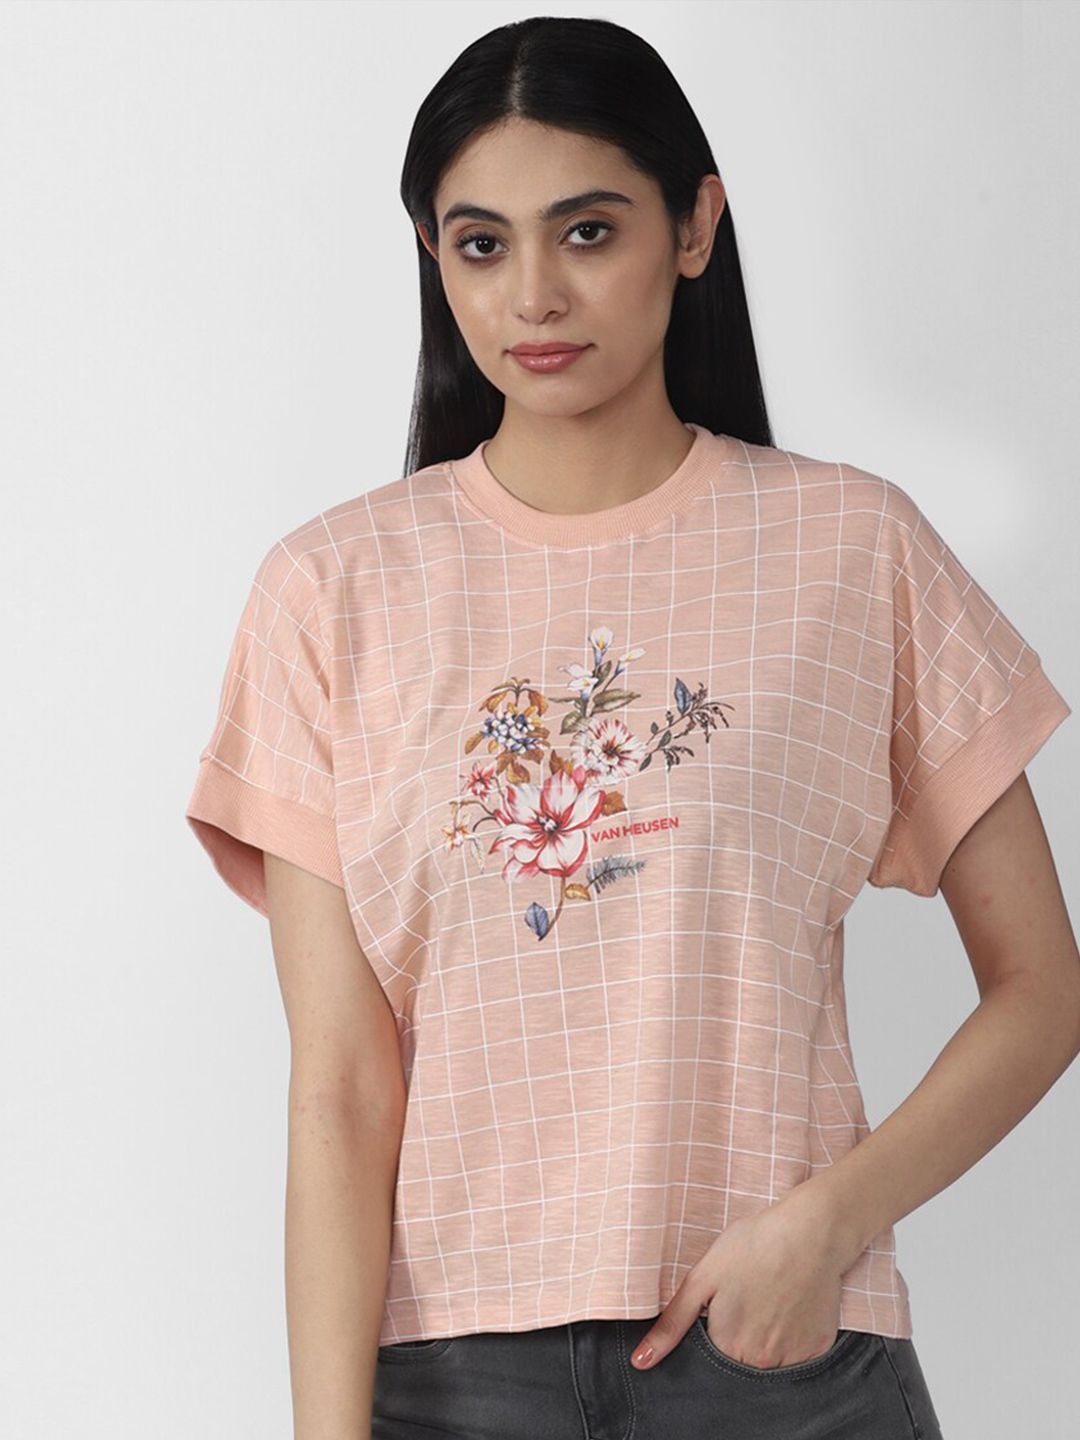 Van Heusen Woman Women Pink & White Floral Print Extended Sleeves Top Price in India